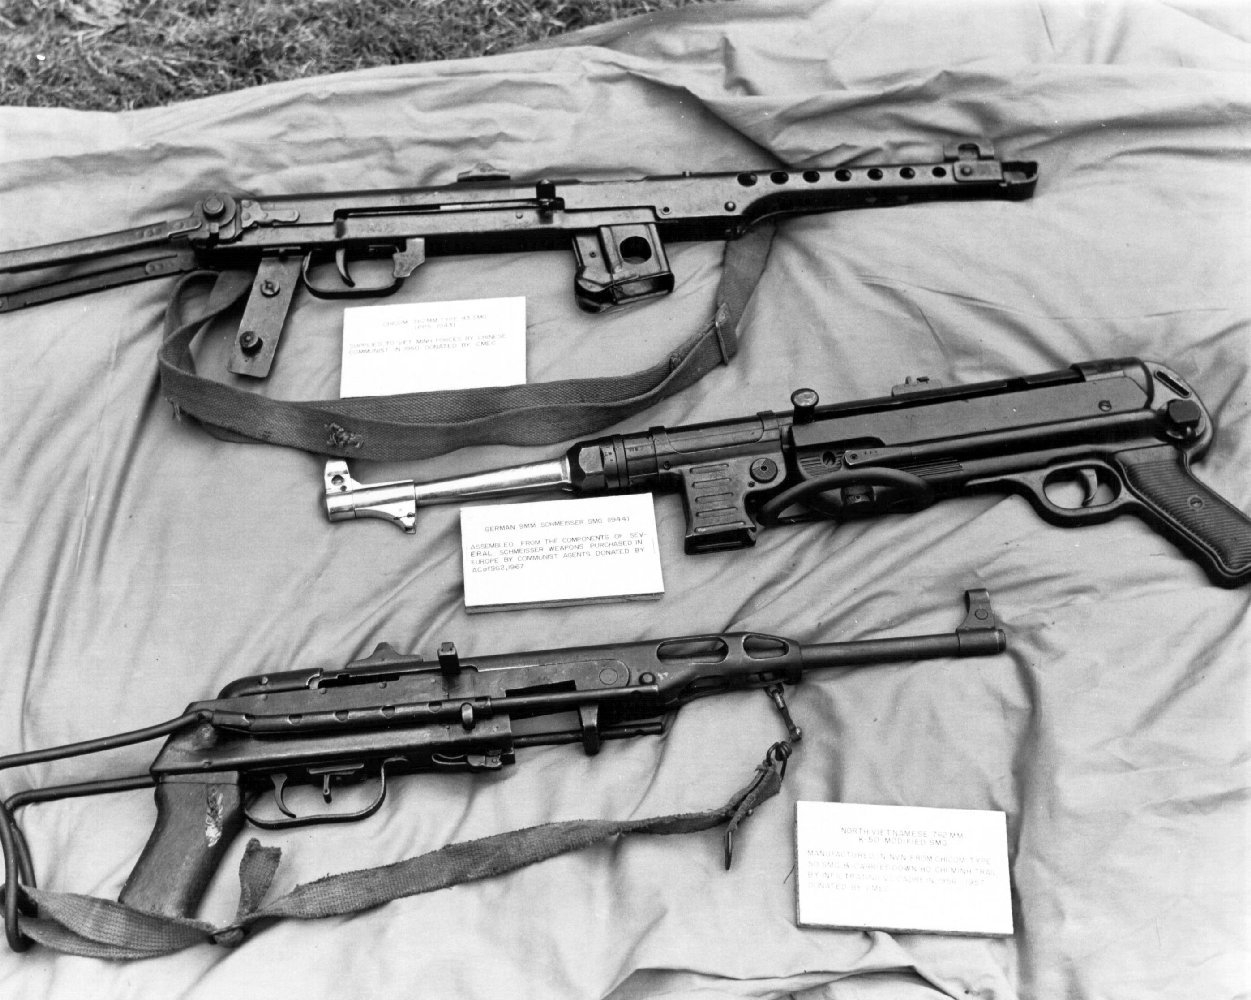 File:Captured NVA Weapons.jpg - Wikipedia, the free encyclopedia